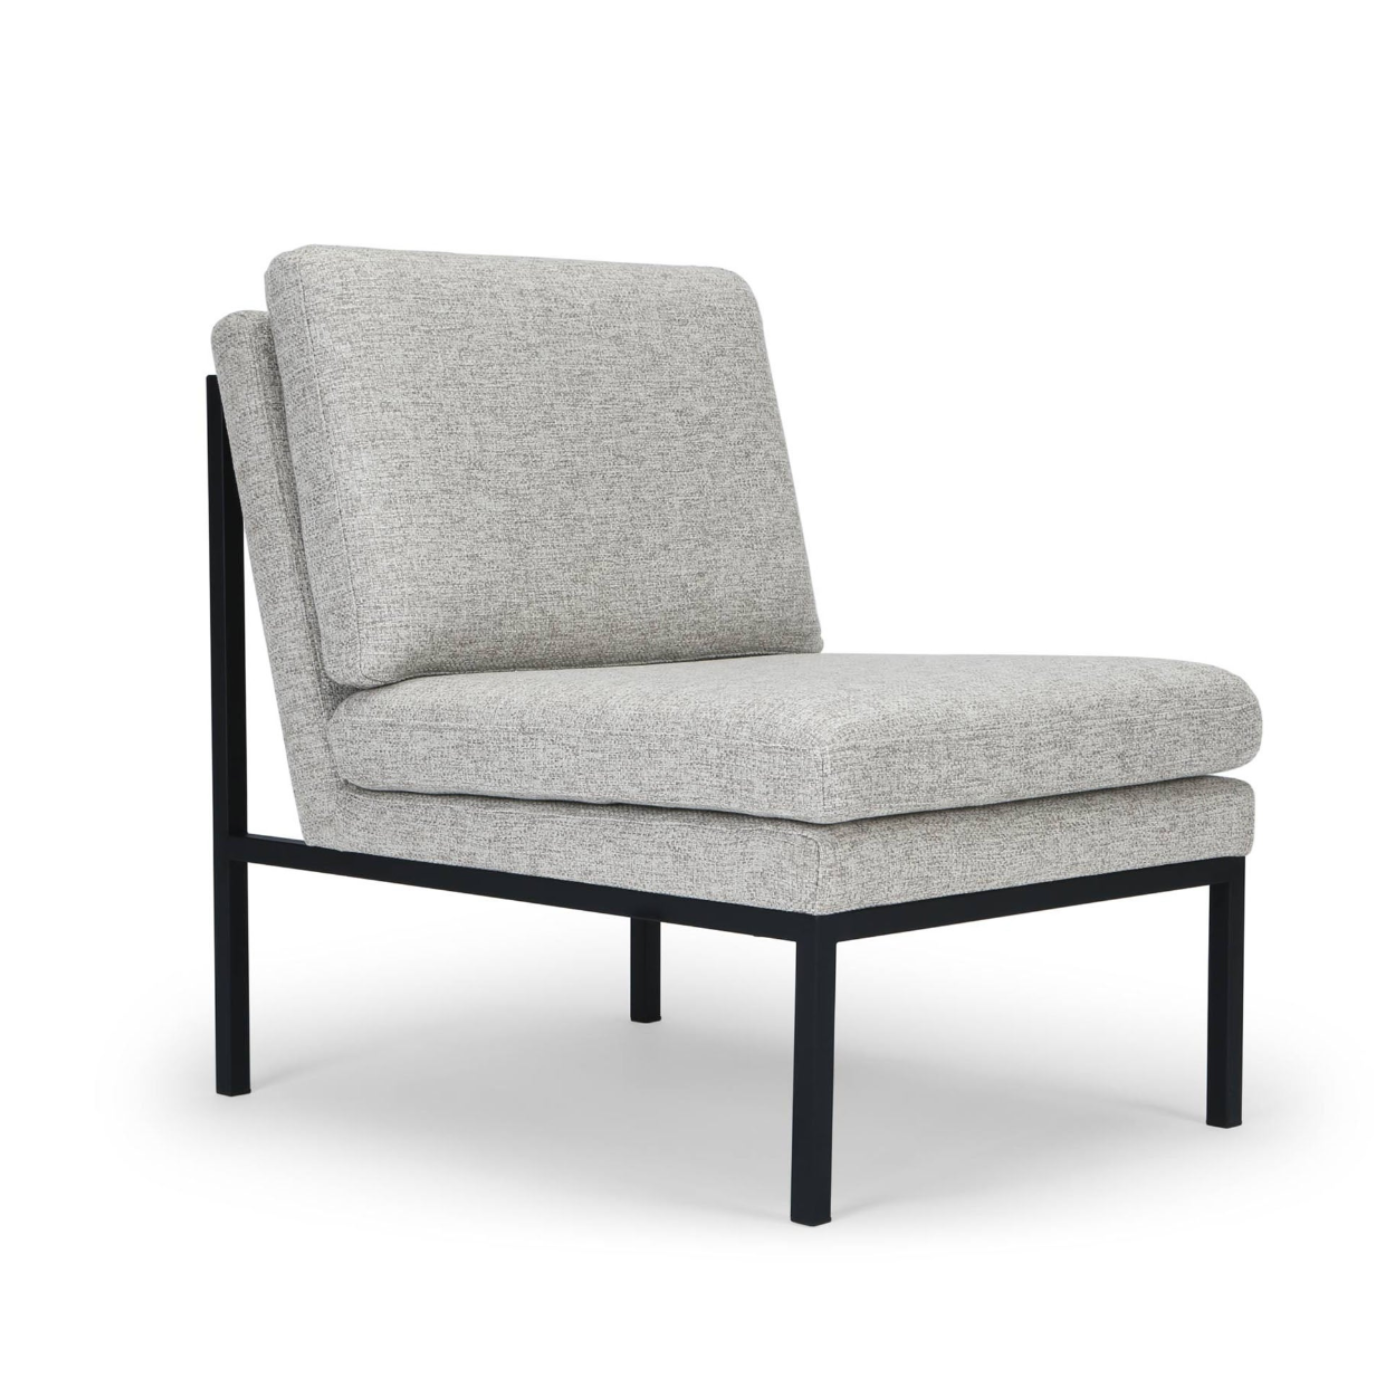 Modular single armless sofa chair